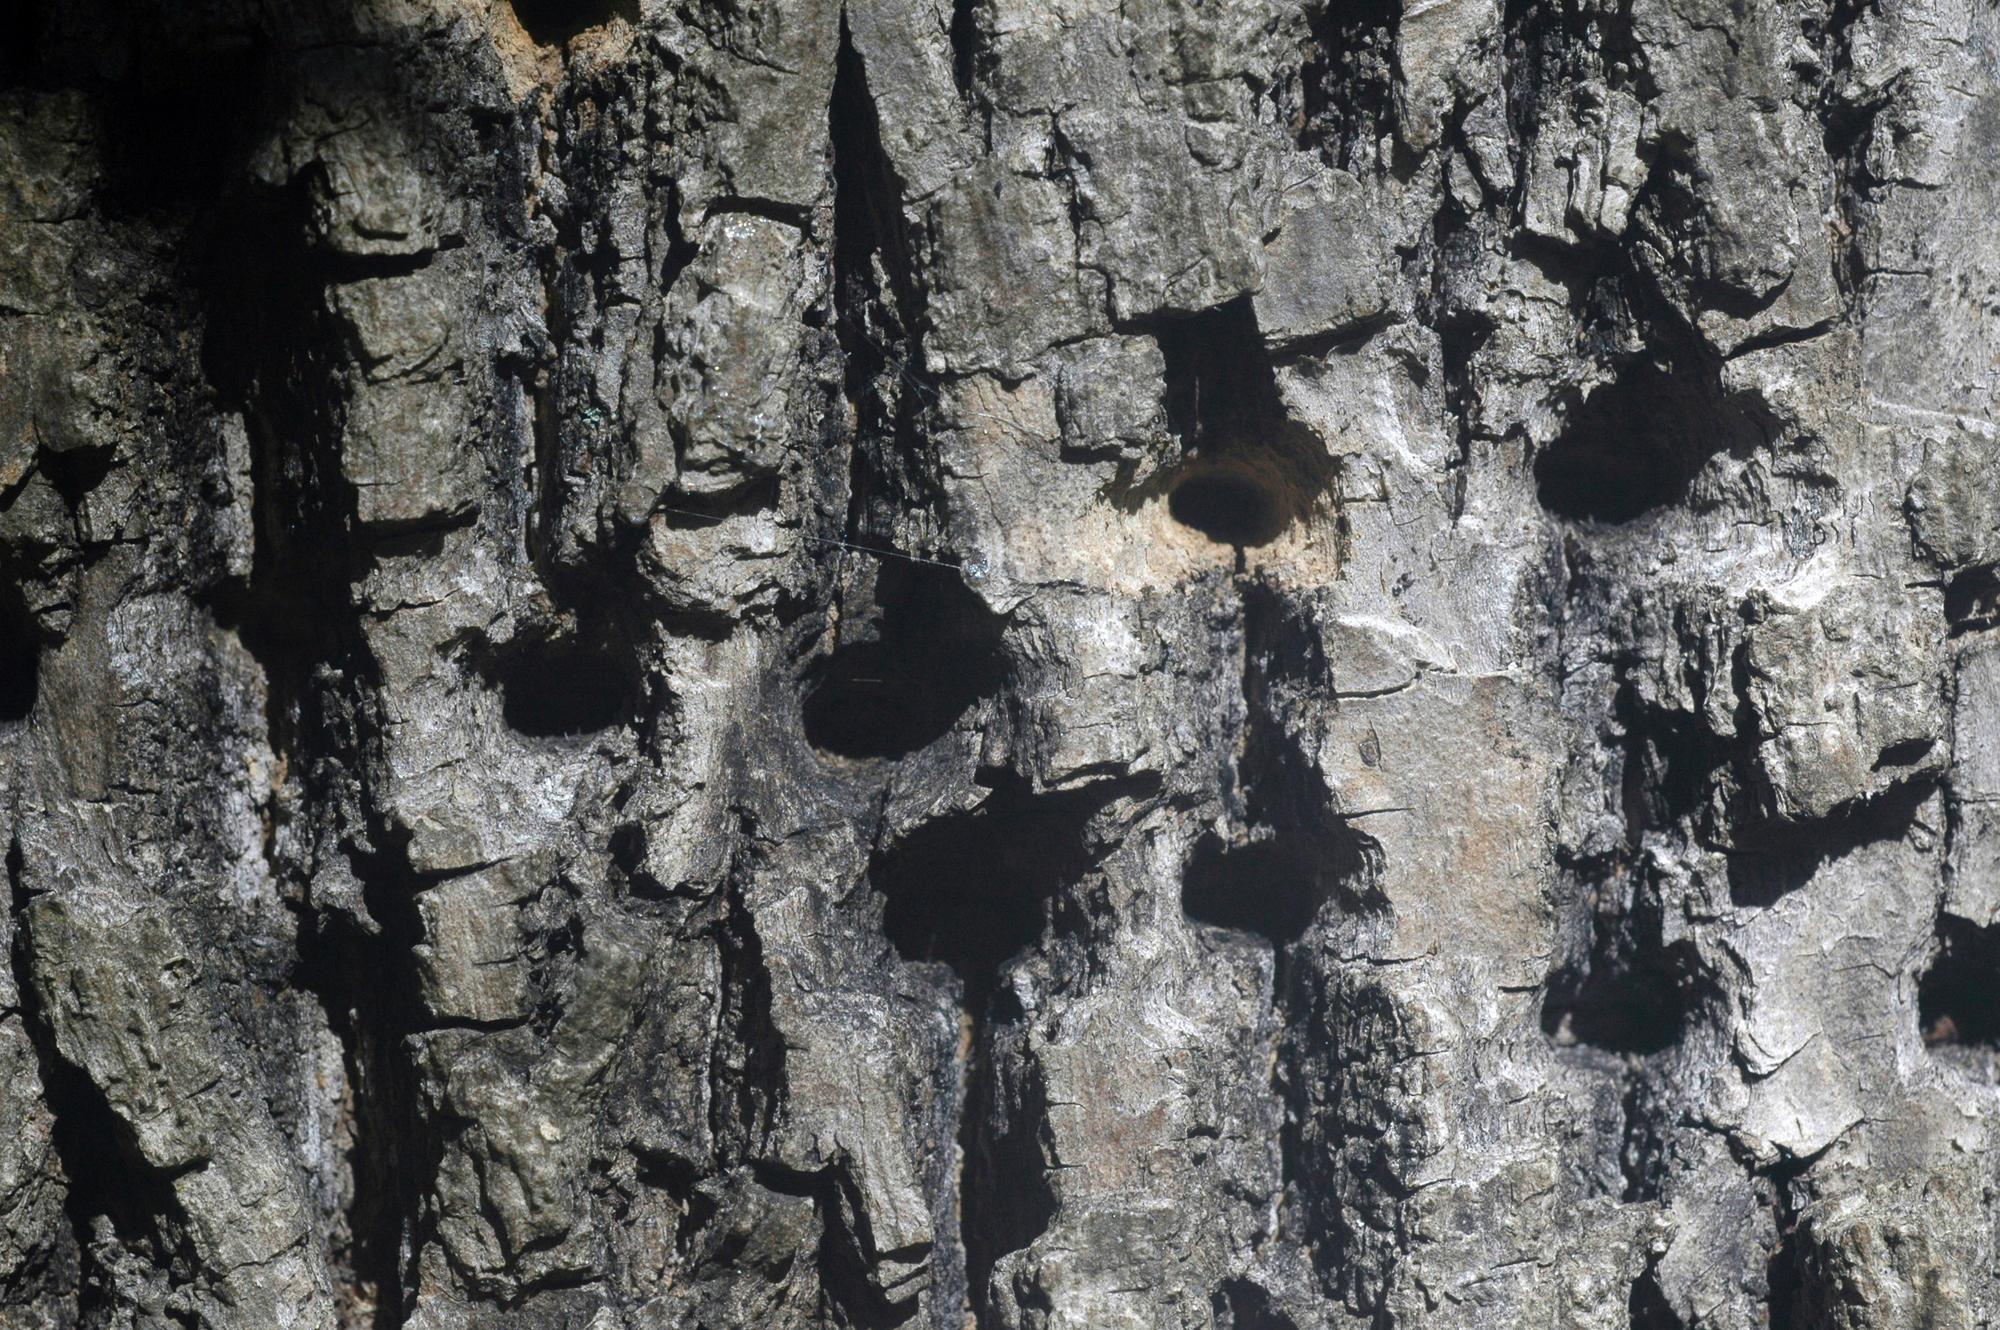 holes in bark